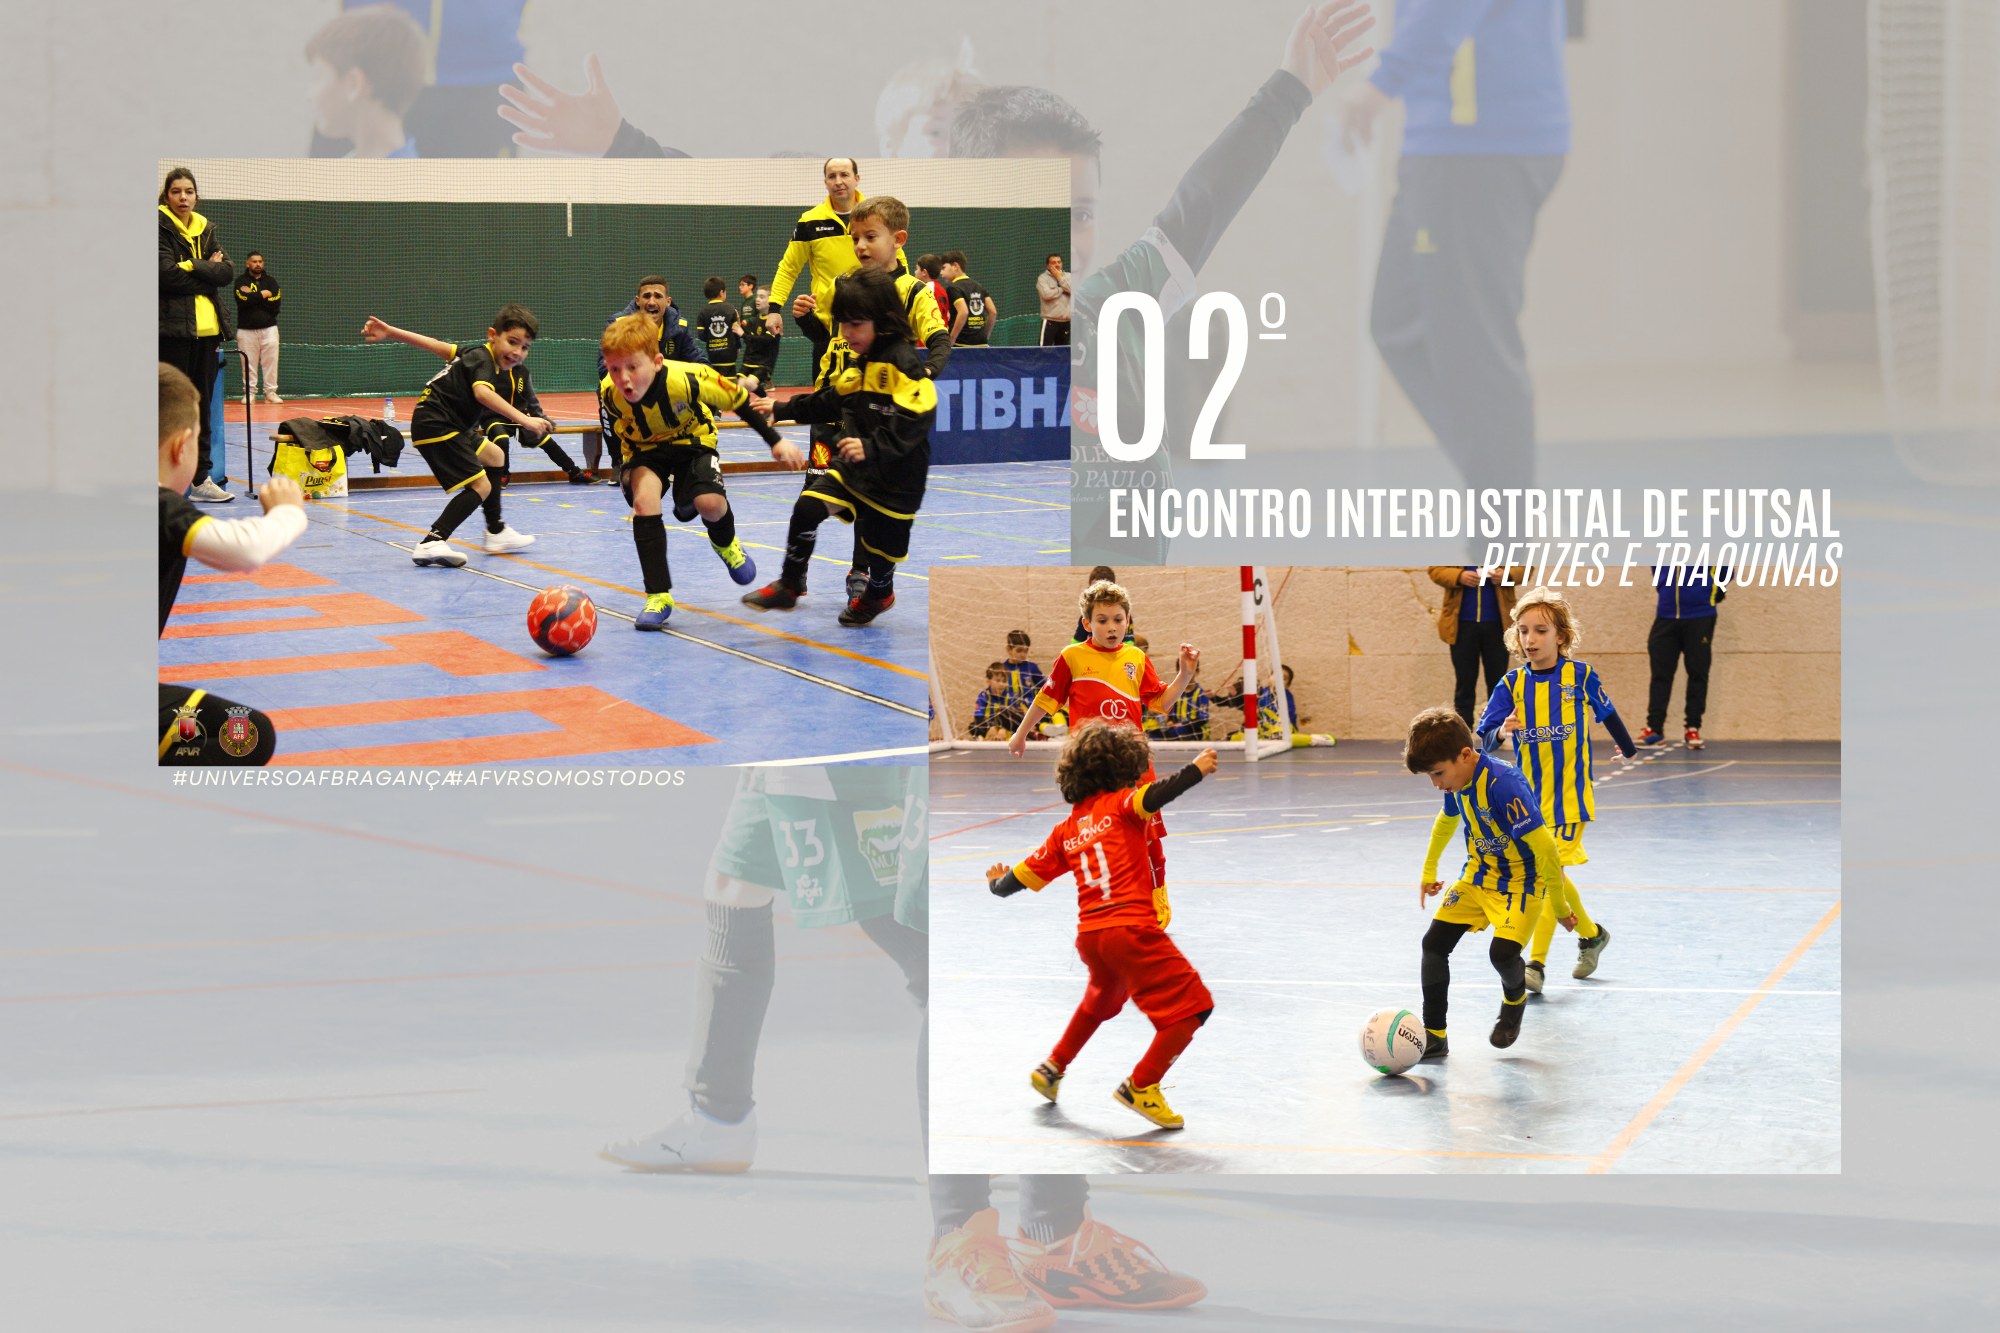 2º Encontro Interdistrital de Futsal | Petizes e Traquinas 